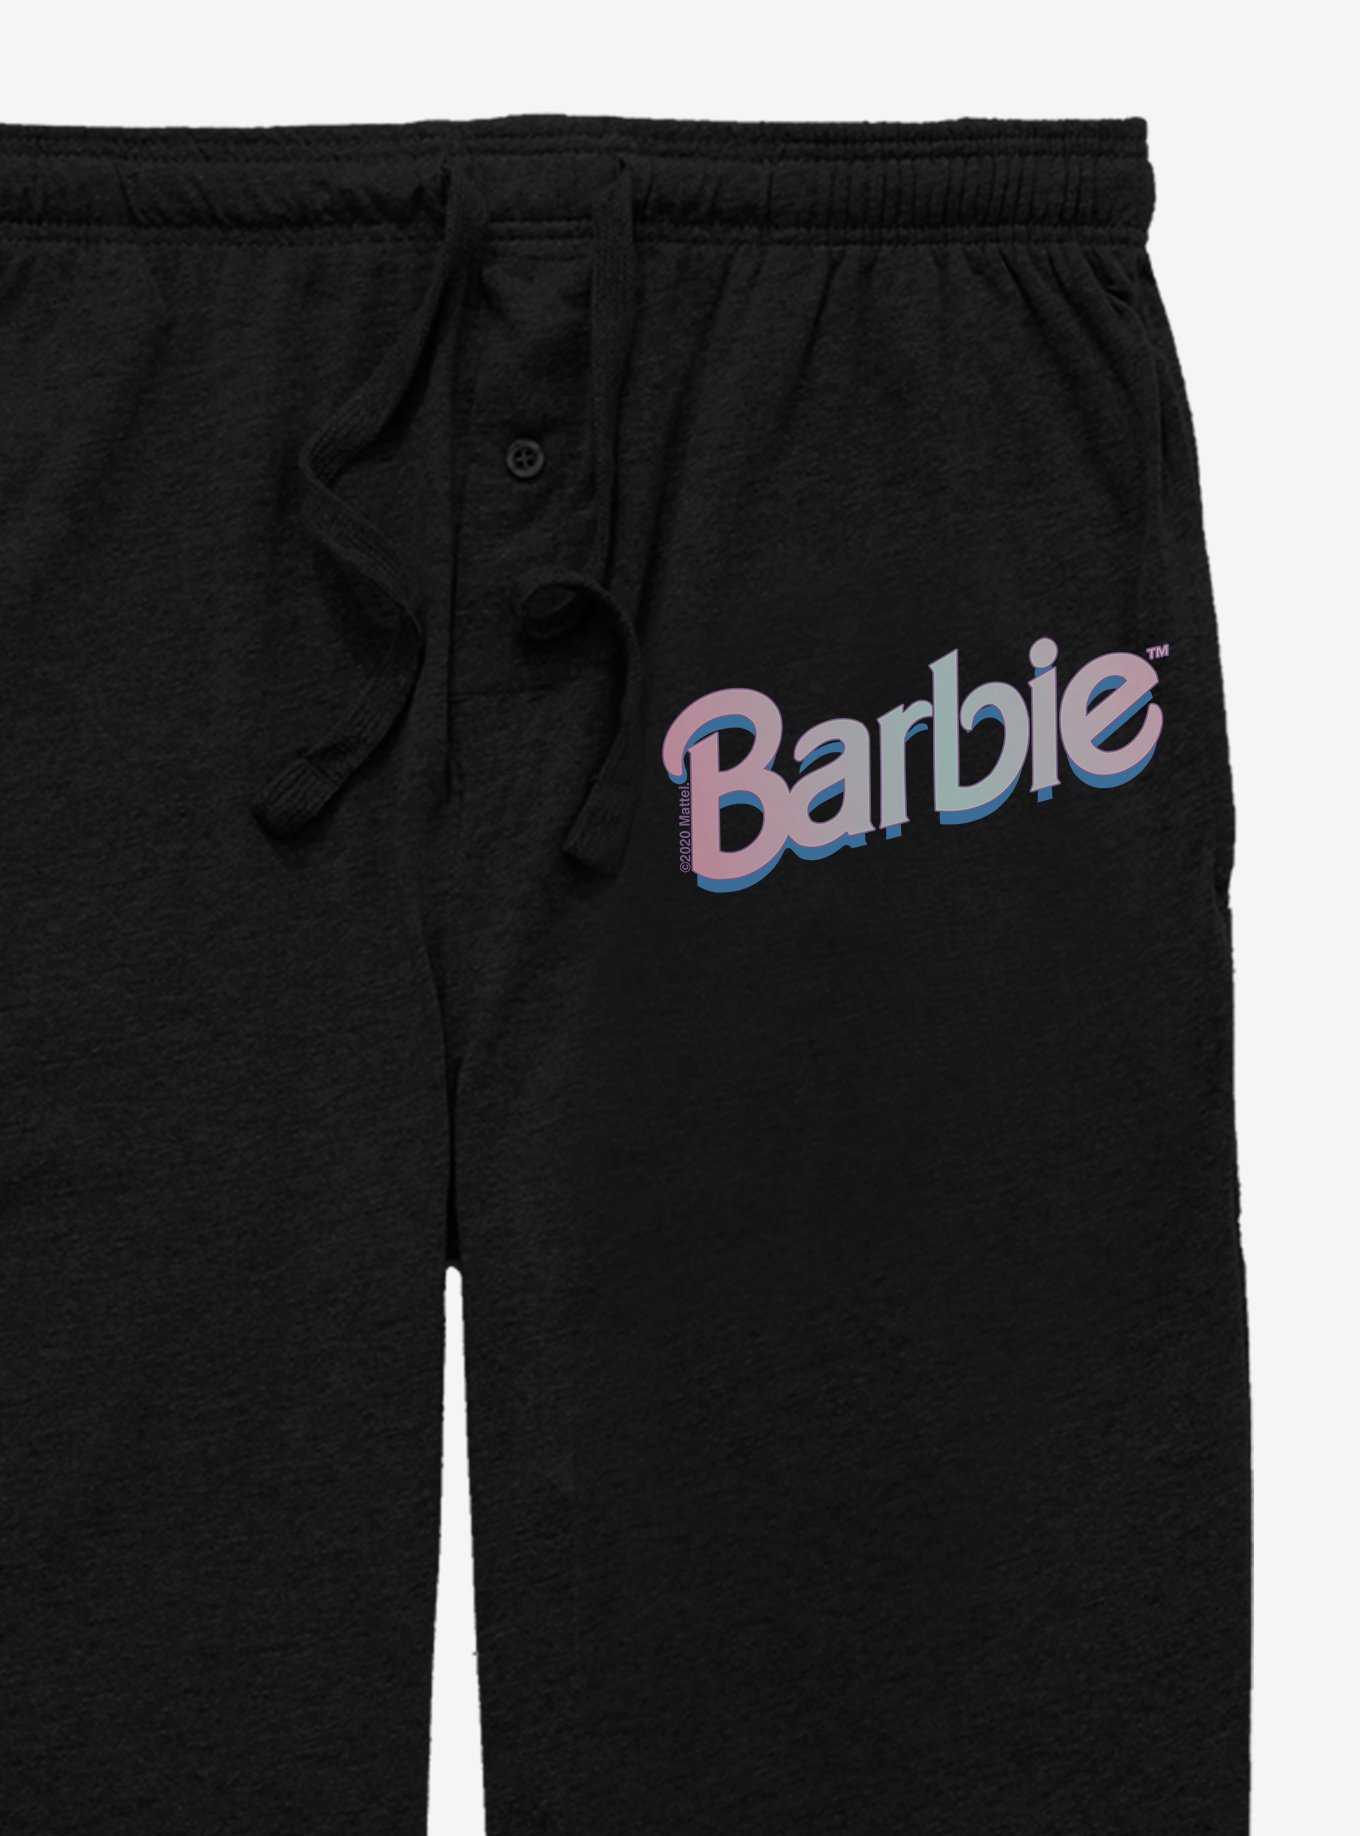 Barbie Cotton Candy Pajama Pants, , hi-res